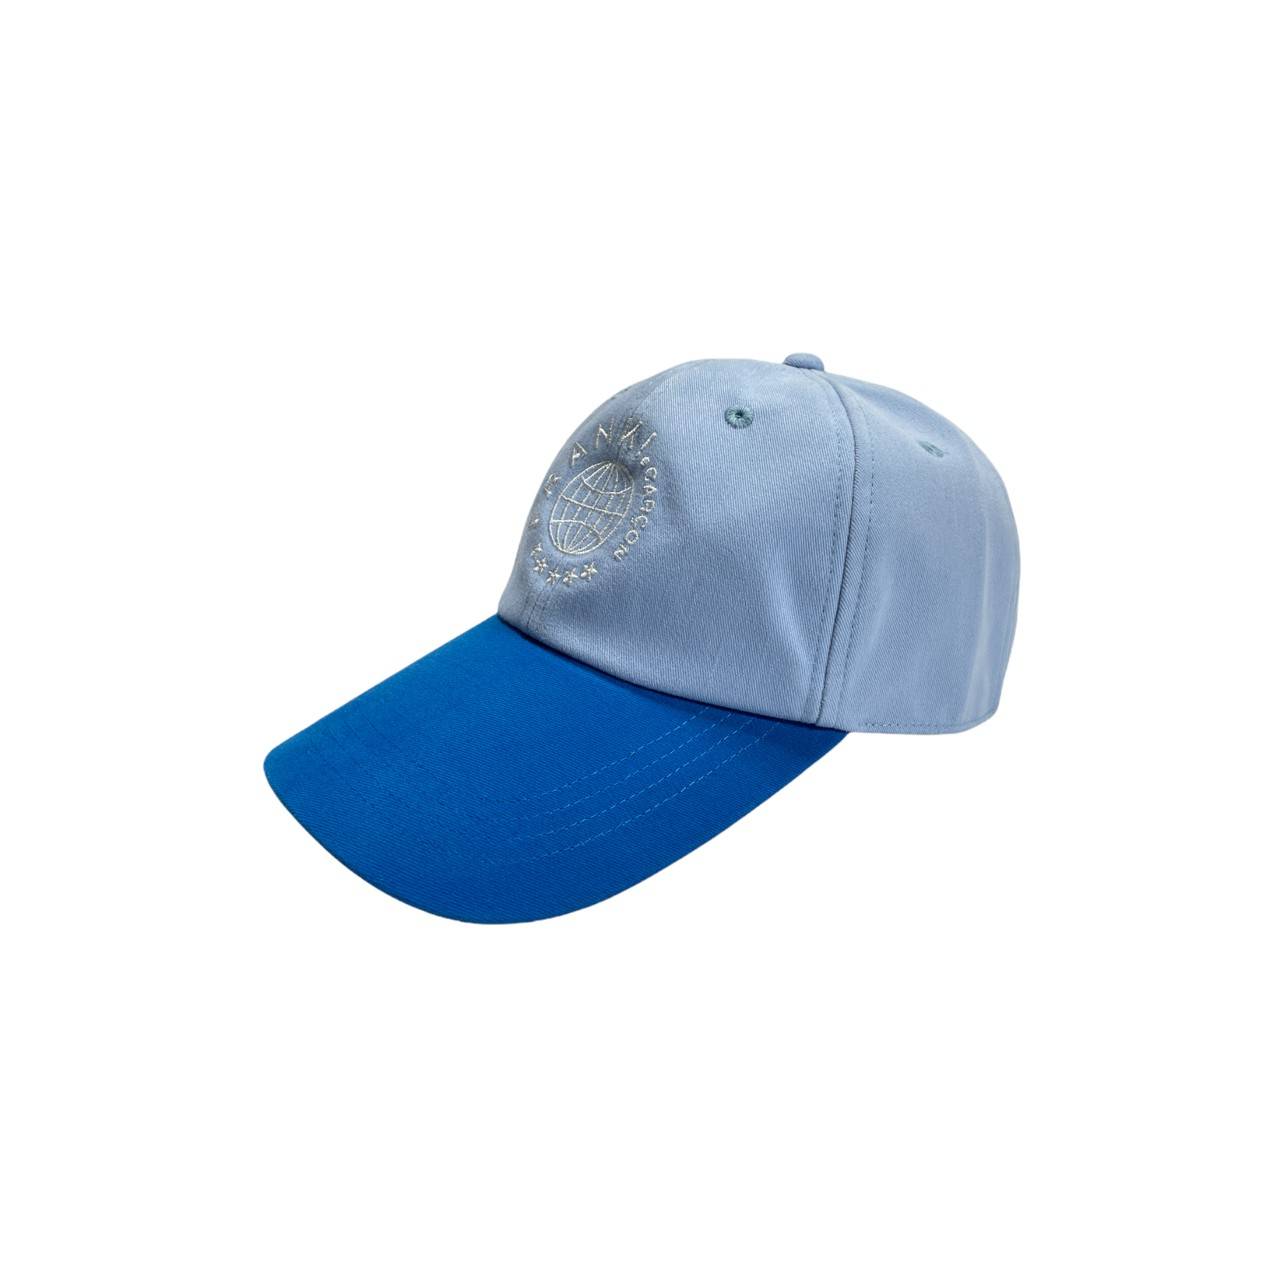 Eric two-tone cap (Blue)